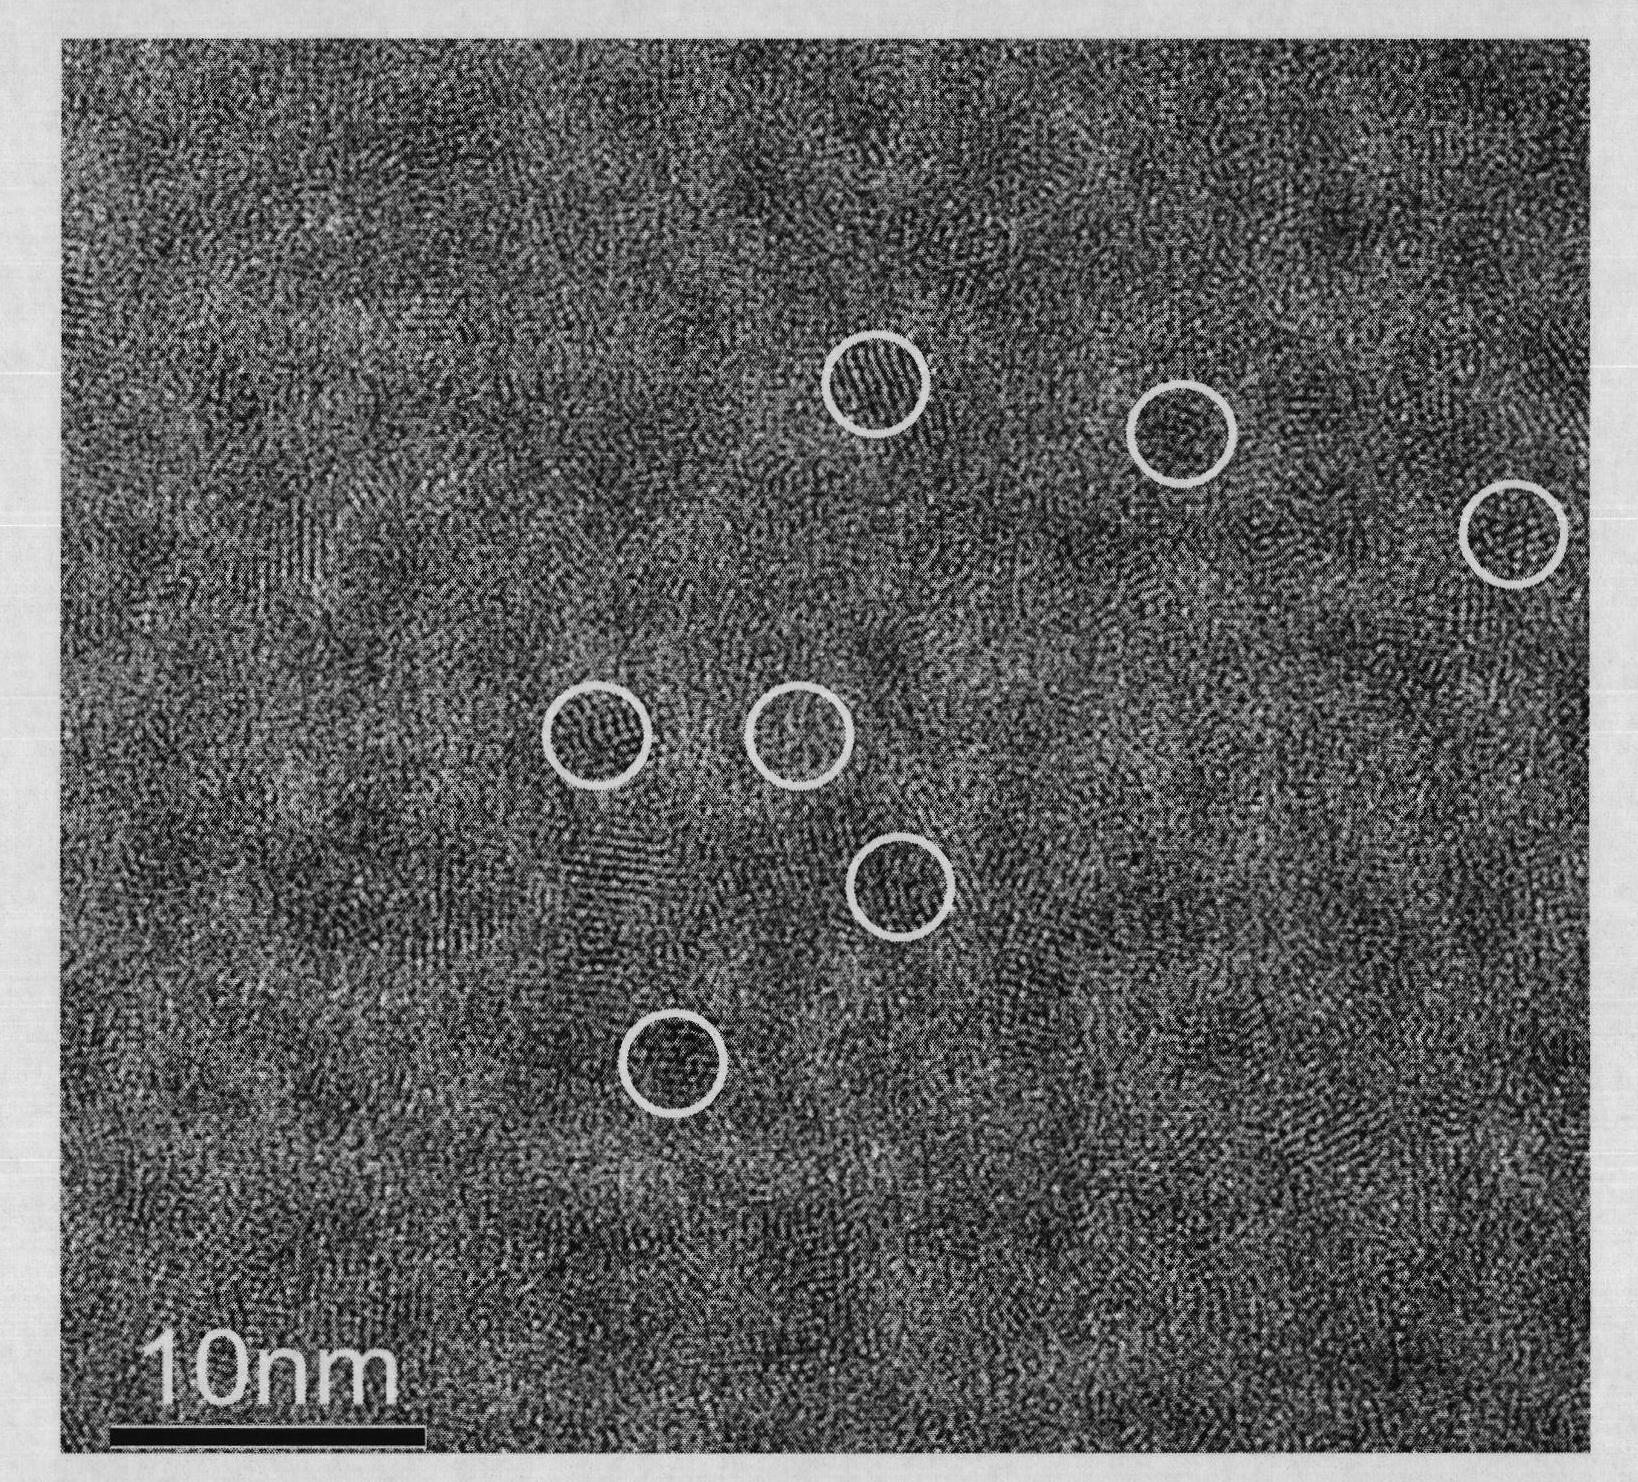 Inorganic semiconductor nanometer material and preparation method thereof